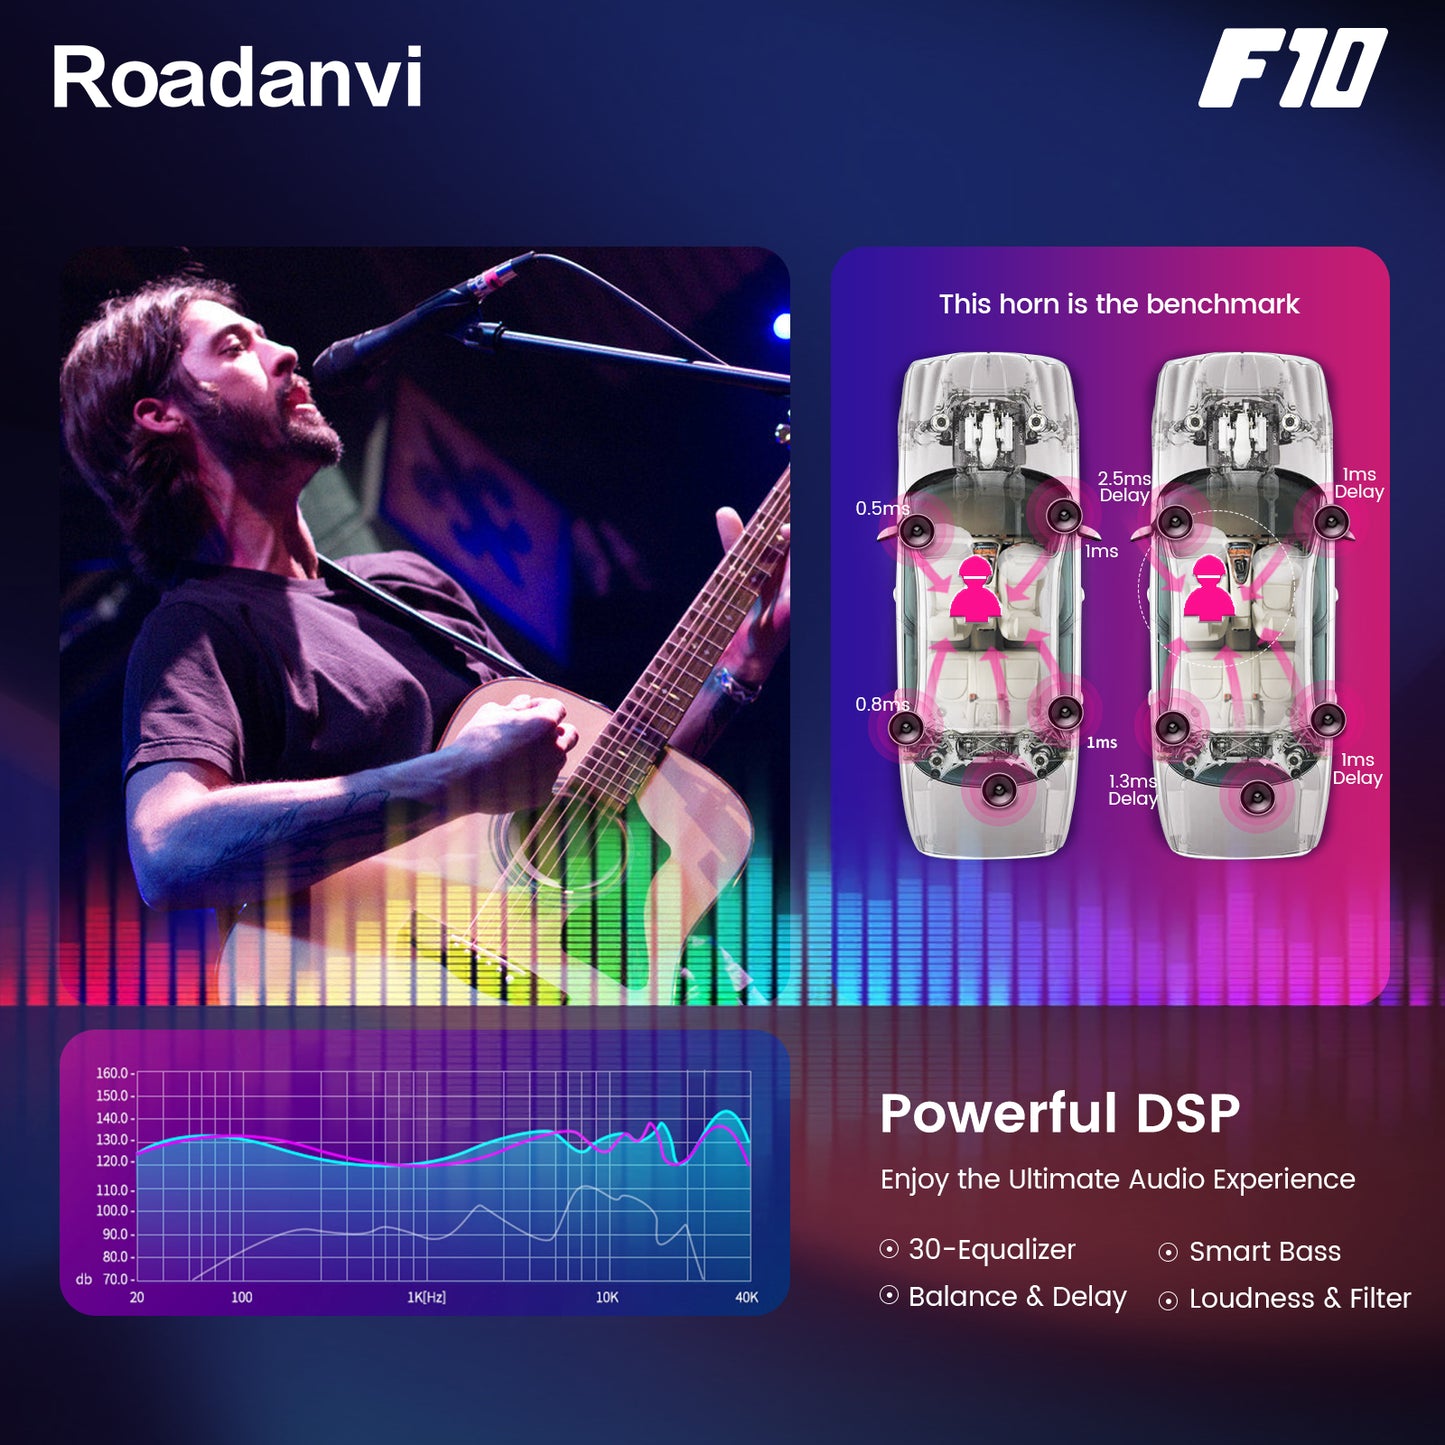 Roadanvi F10 For Honda Accord 2013 2014 2015 2016 2017 Car Stereo Android 10 IPS Screen 10.2 Inch 1280*720 4G RAM Wifi Head Unit